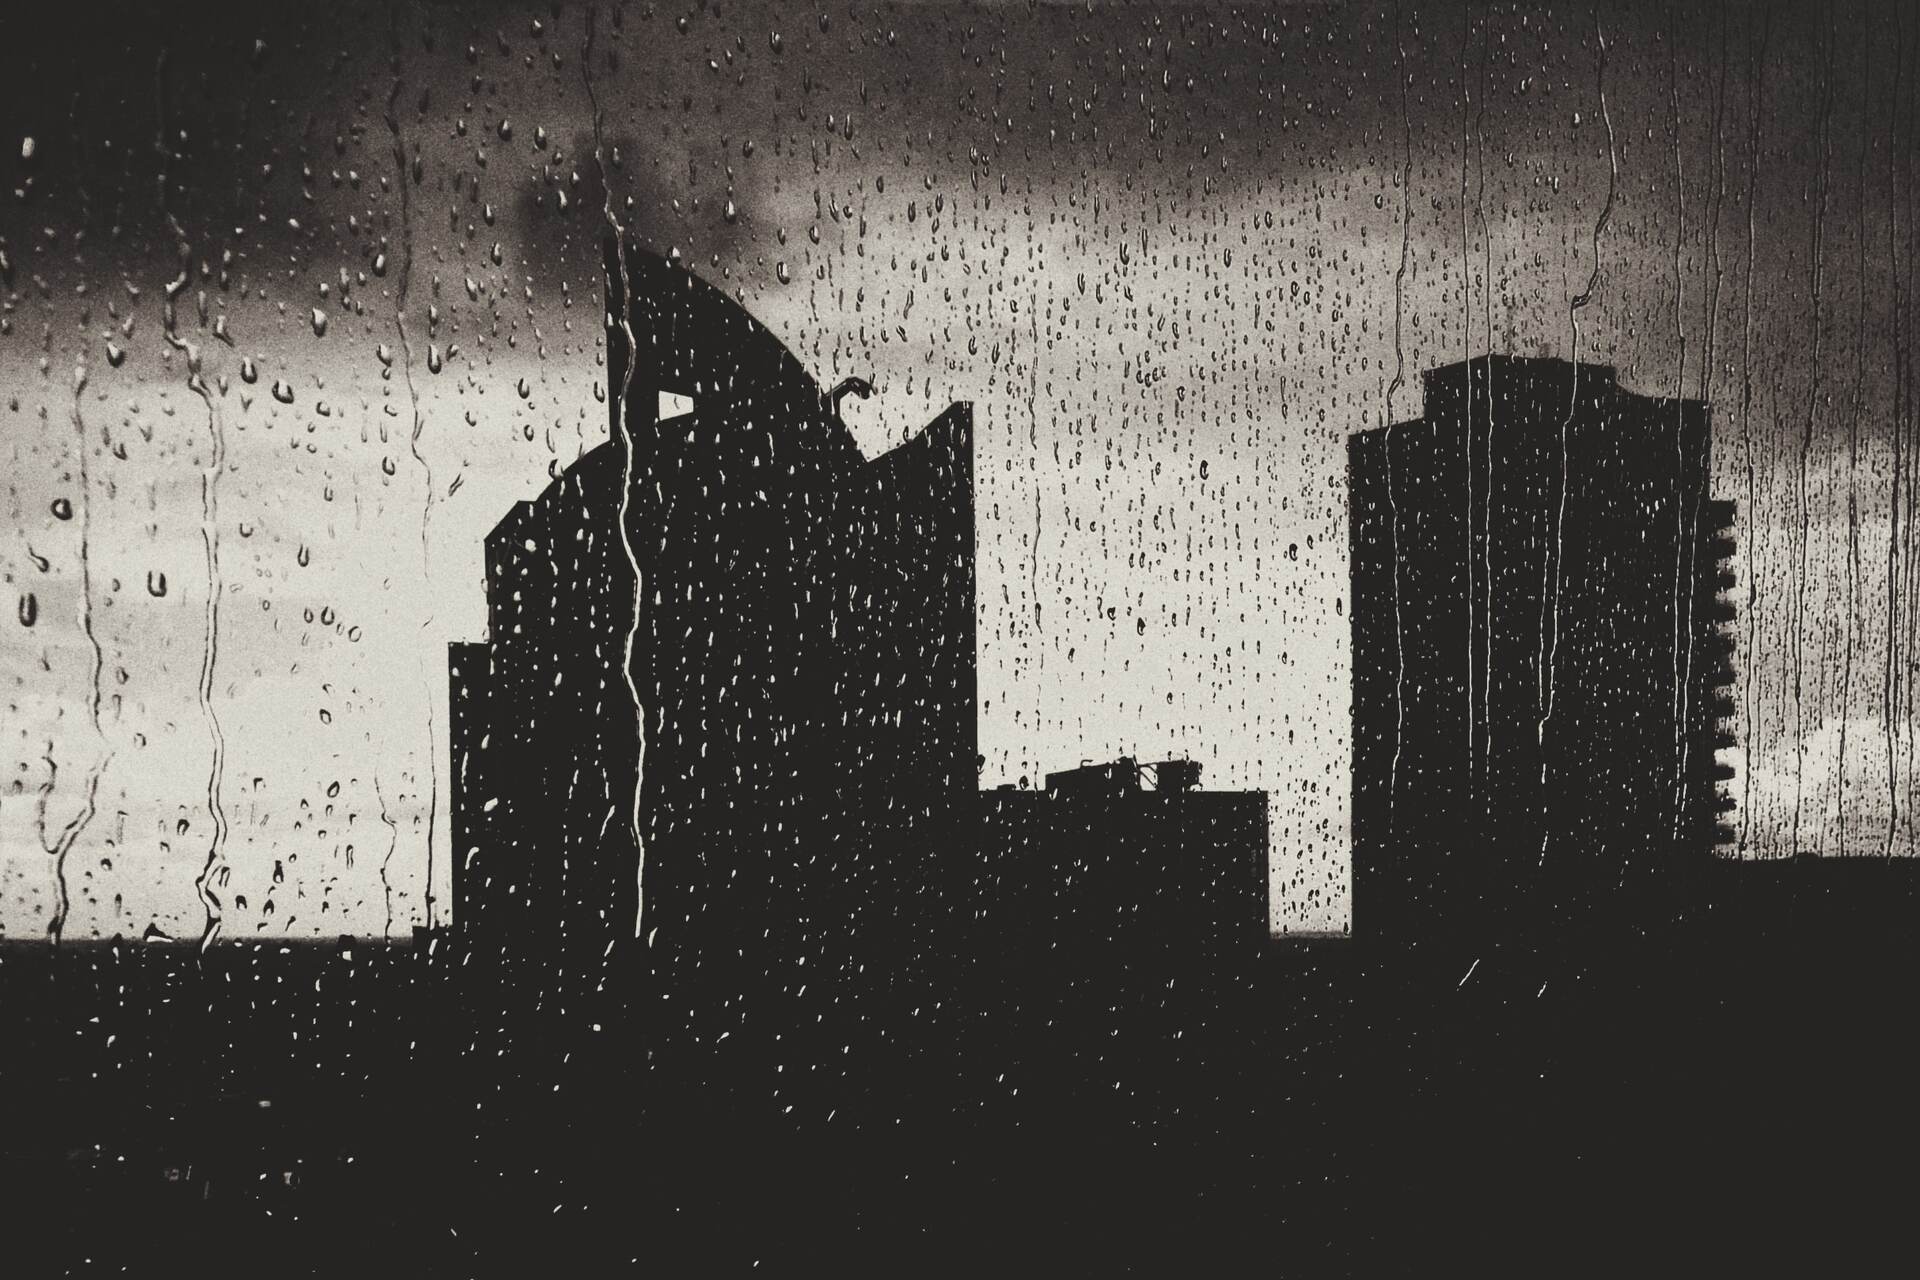 A city skyline on a rainy day